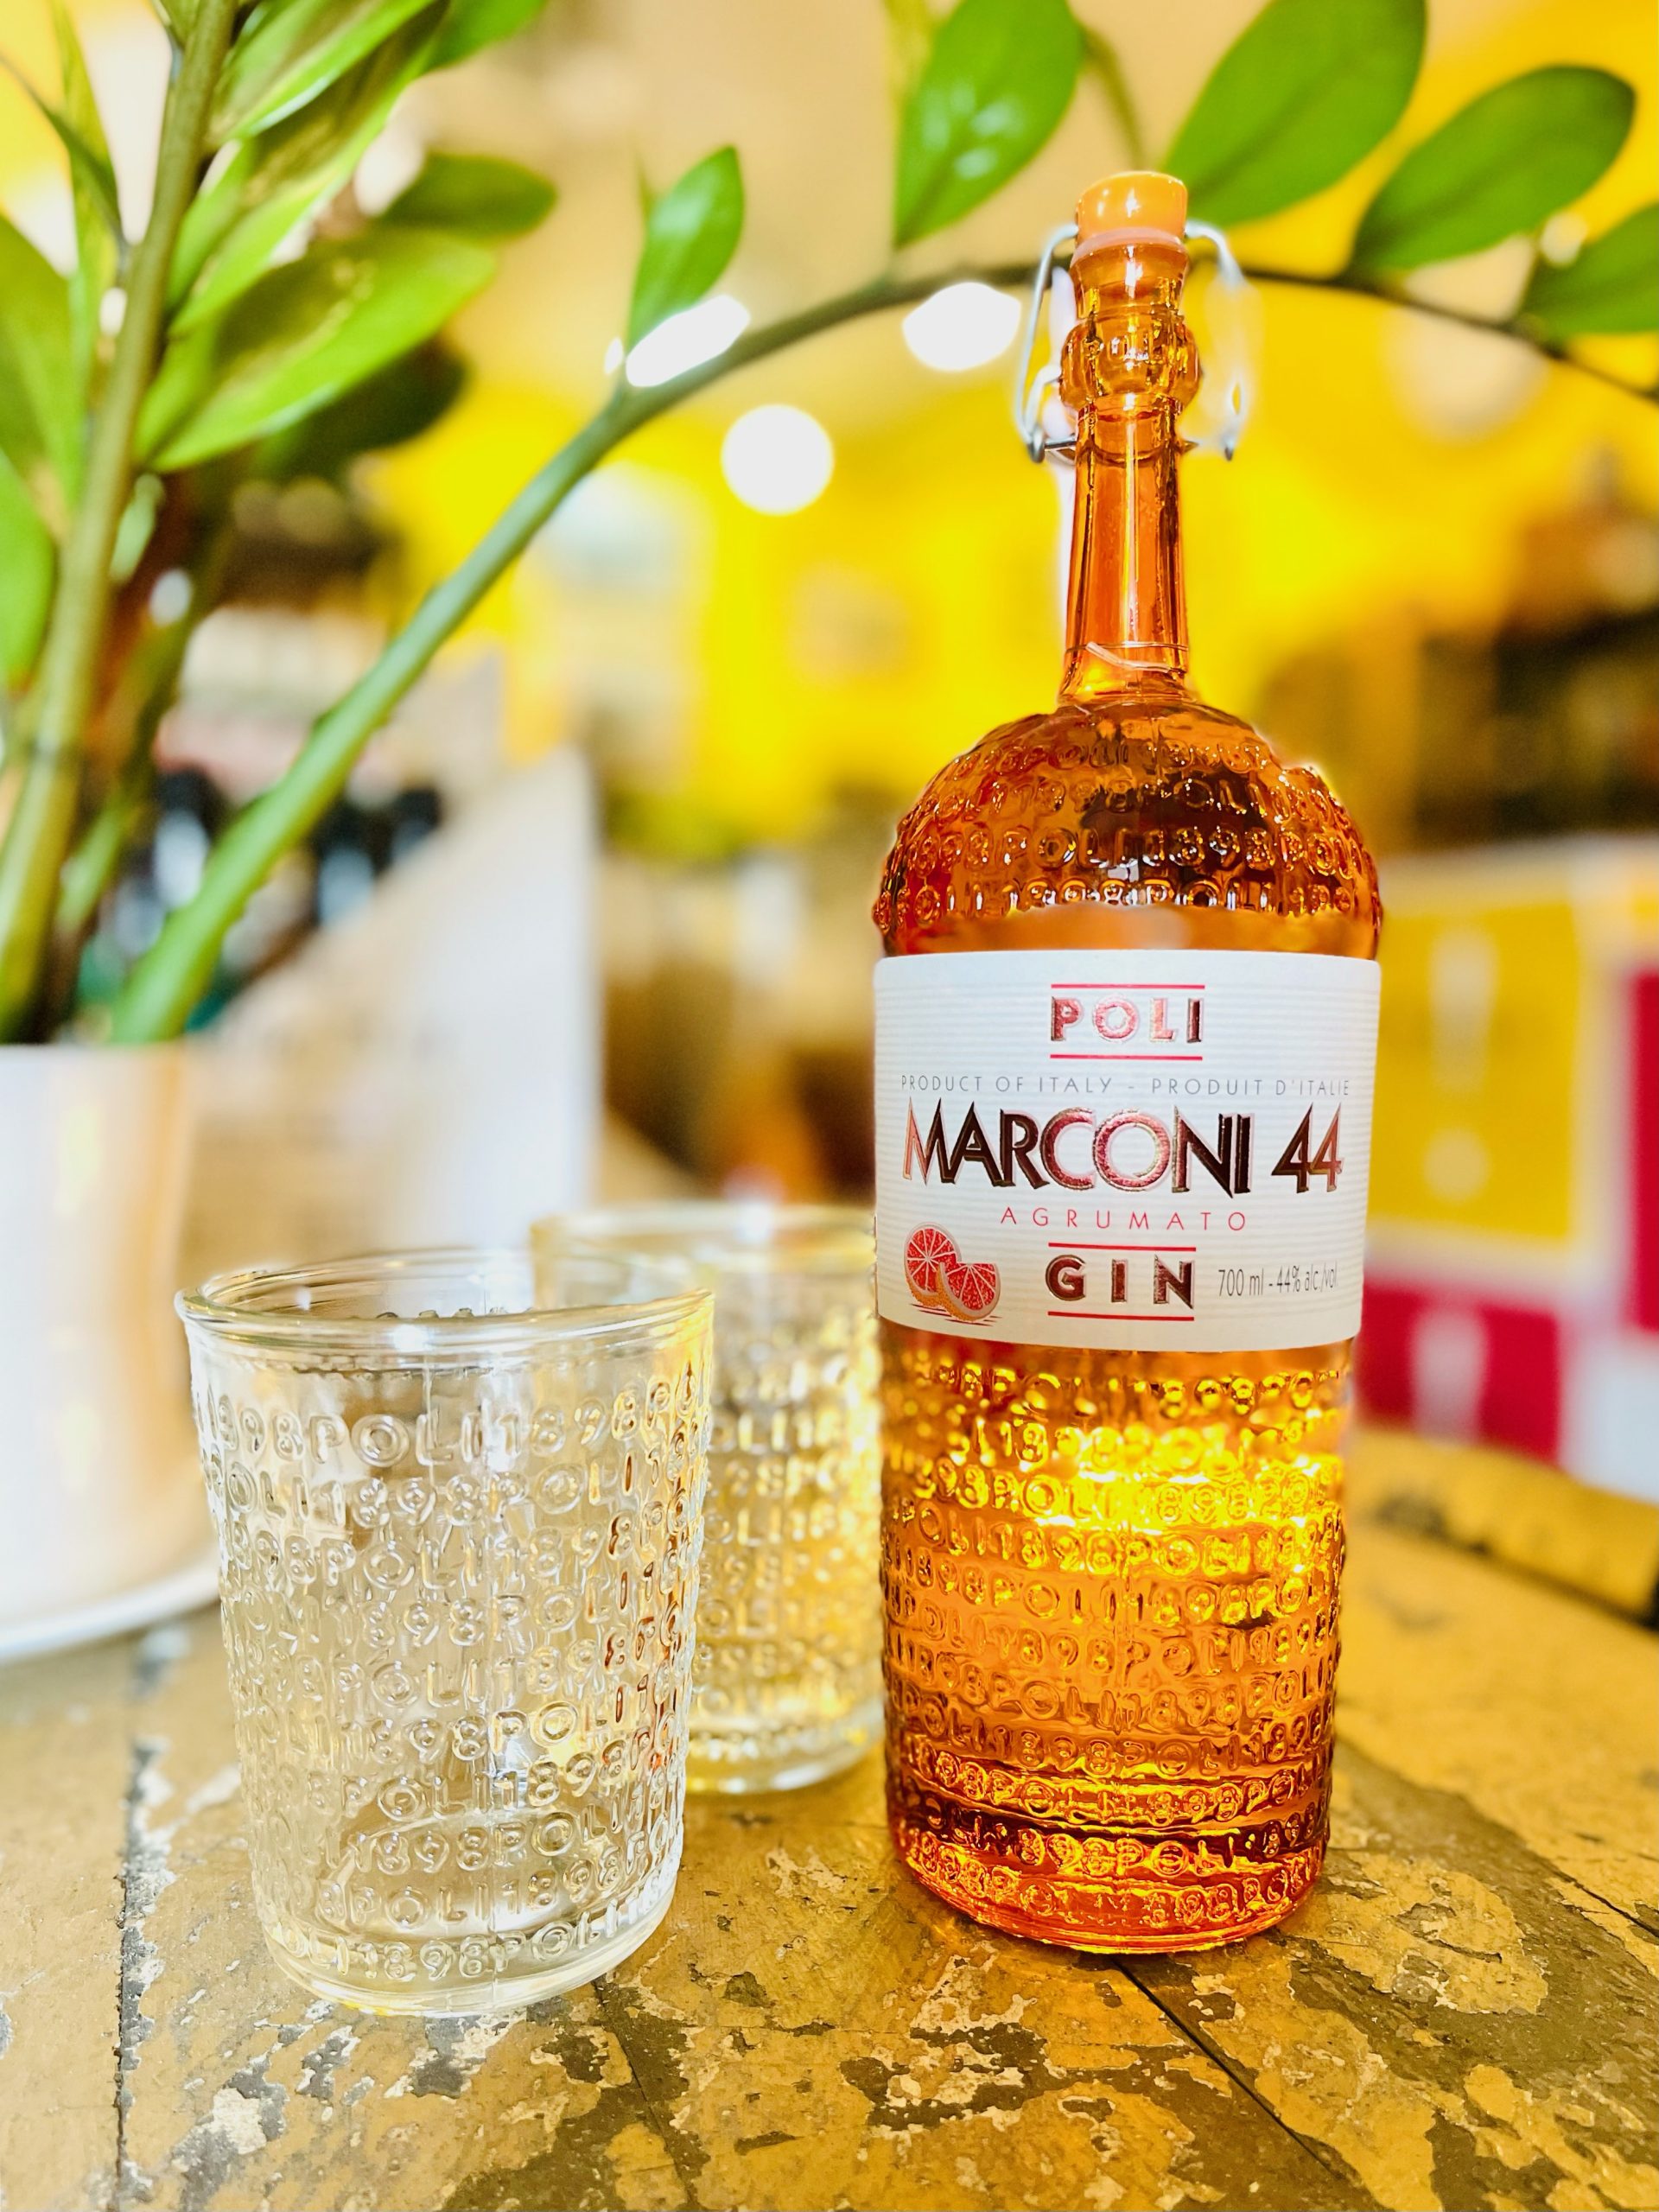 Poli Marconi 44 Agrumato Citrus Gin – Italy